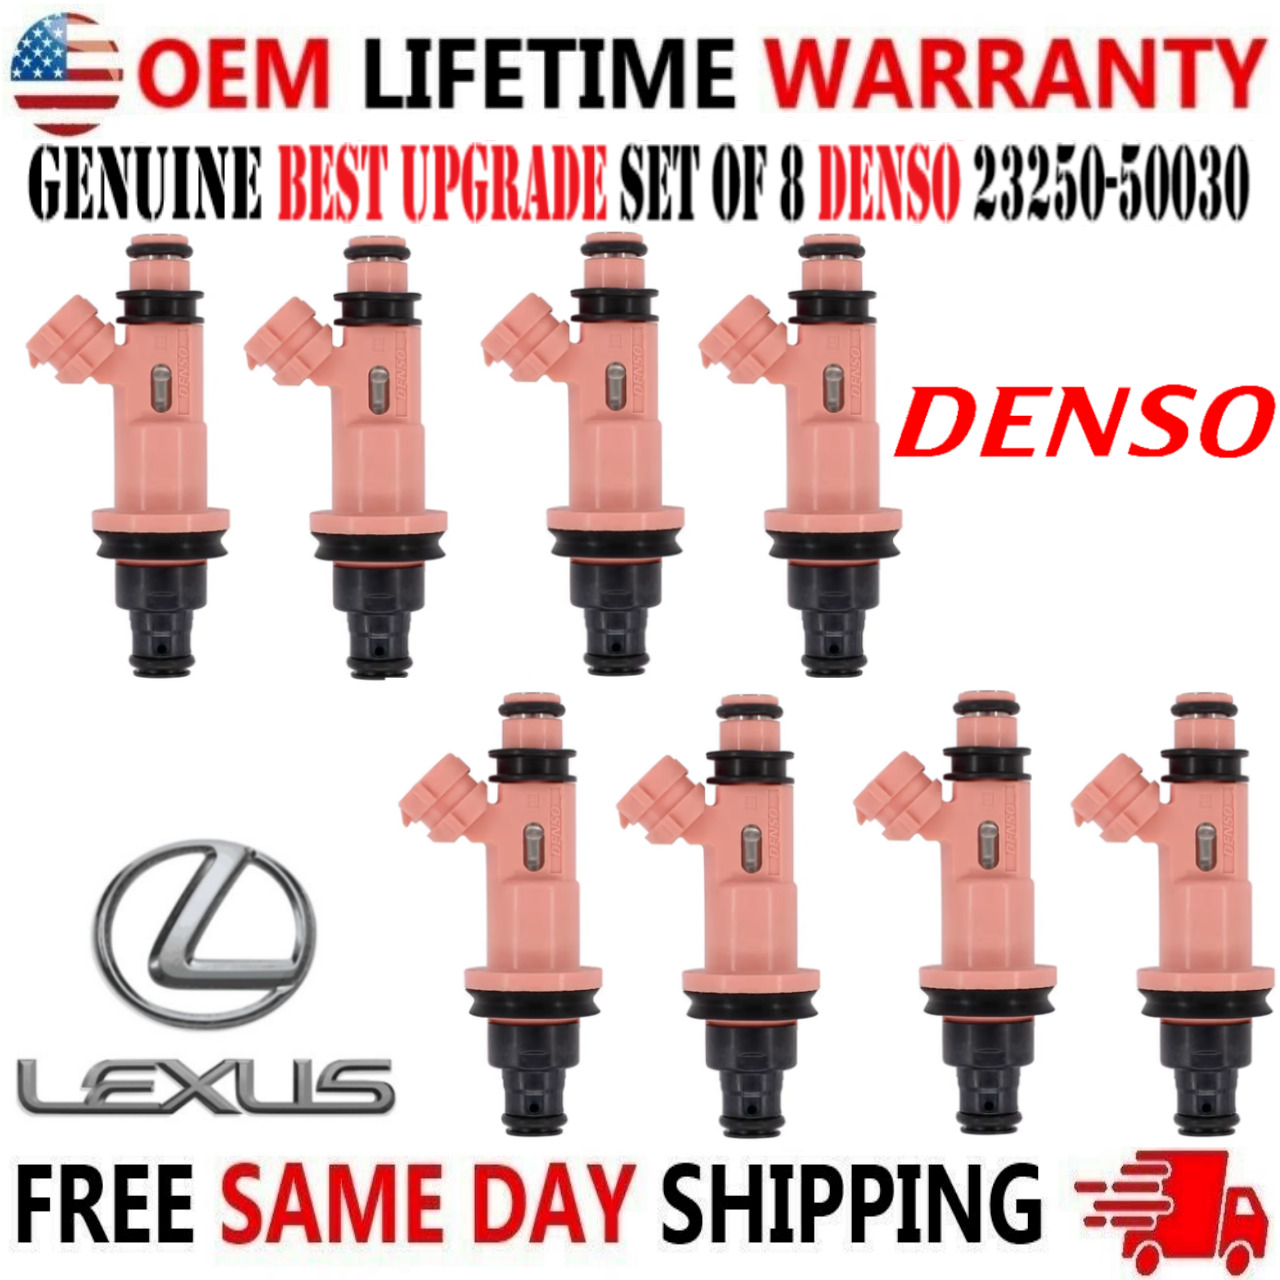 GENUINE DENSO 8pcs Best UPGRADE Fuel Injectors for 1998-2010 Lexus 4.0L V8 4.3L